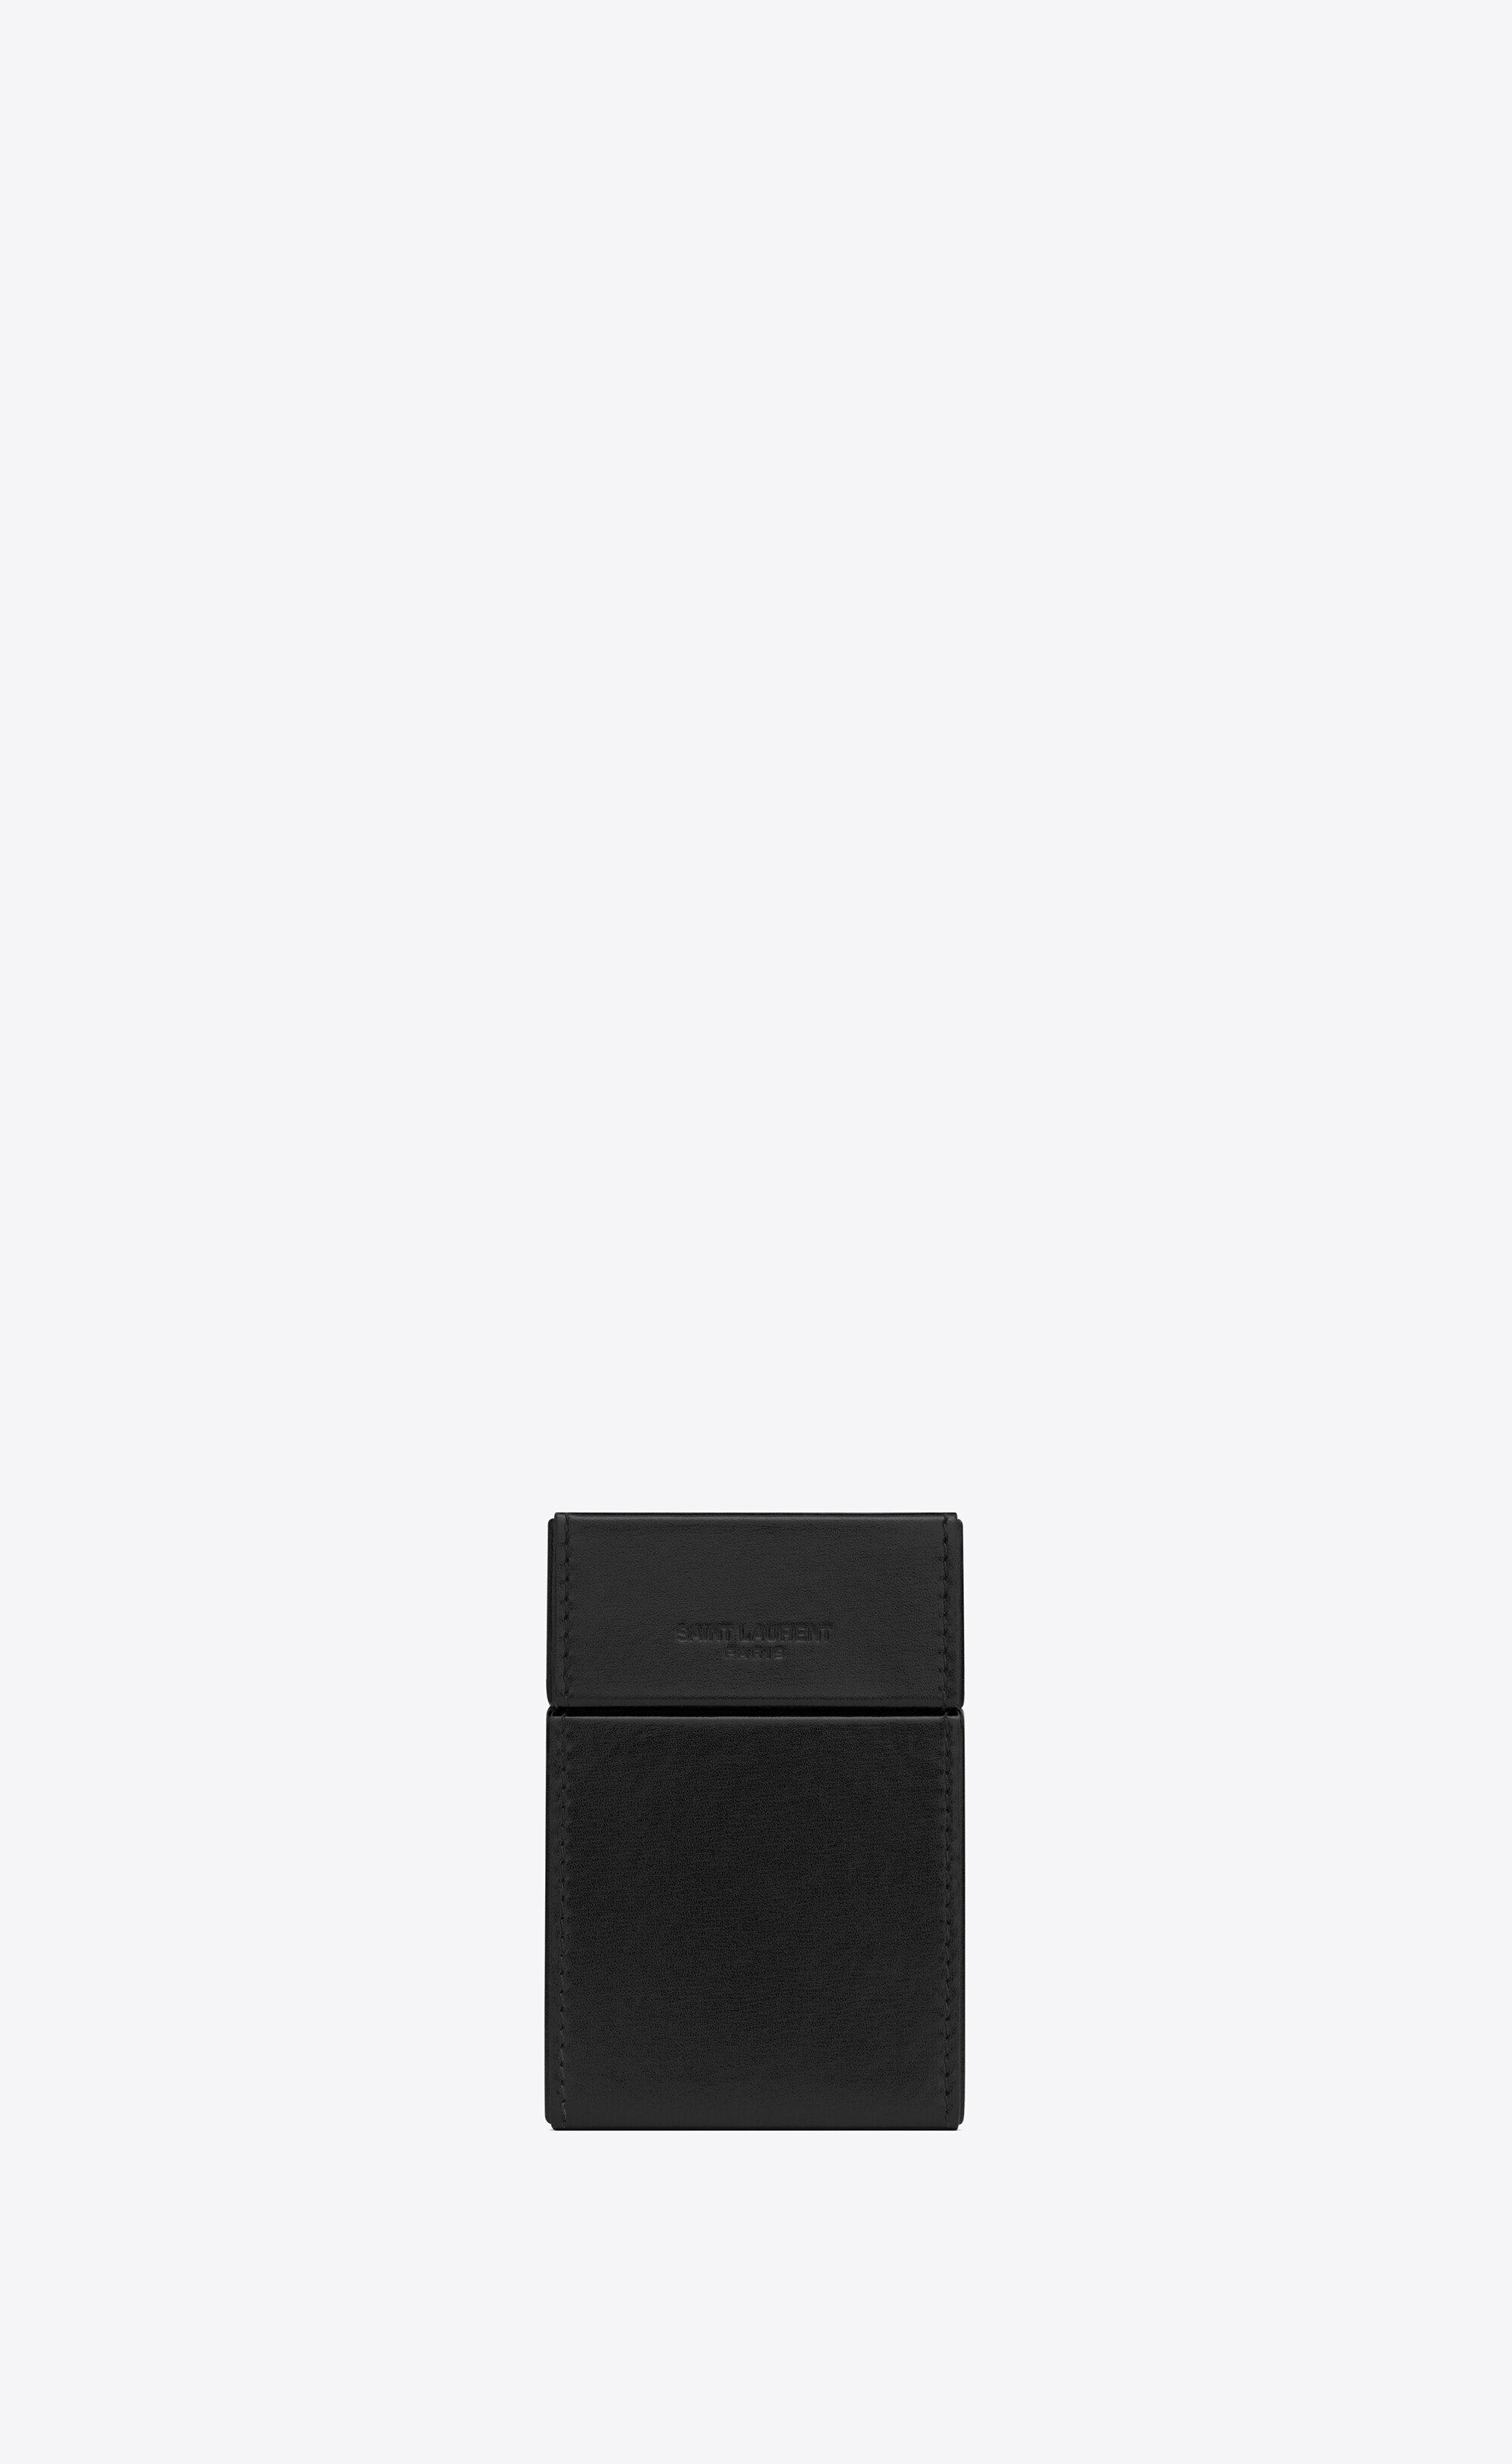 saint laurent paris cigarette box in smooth leather